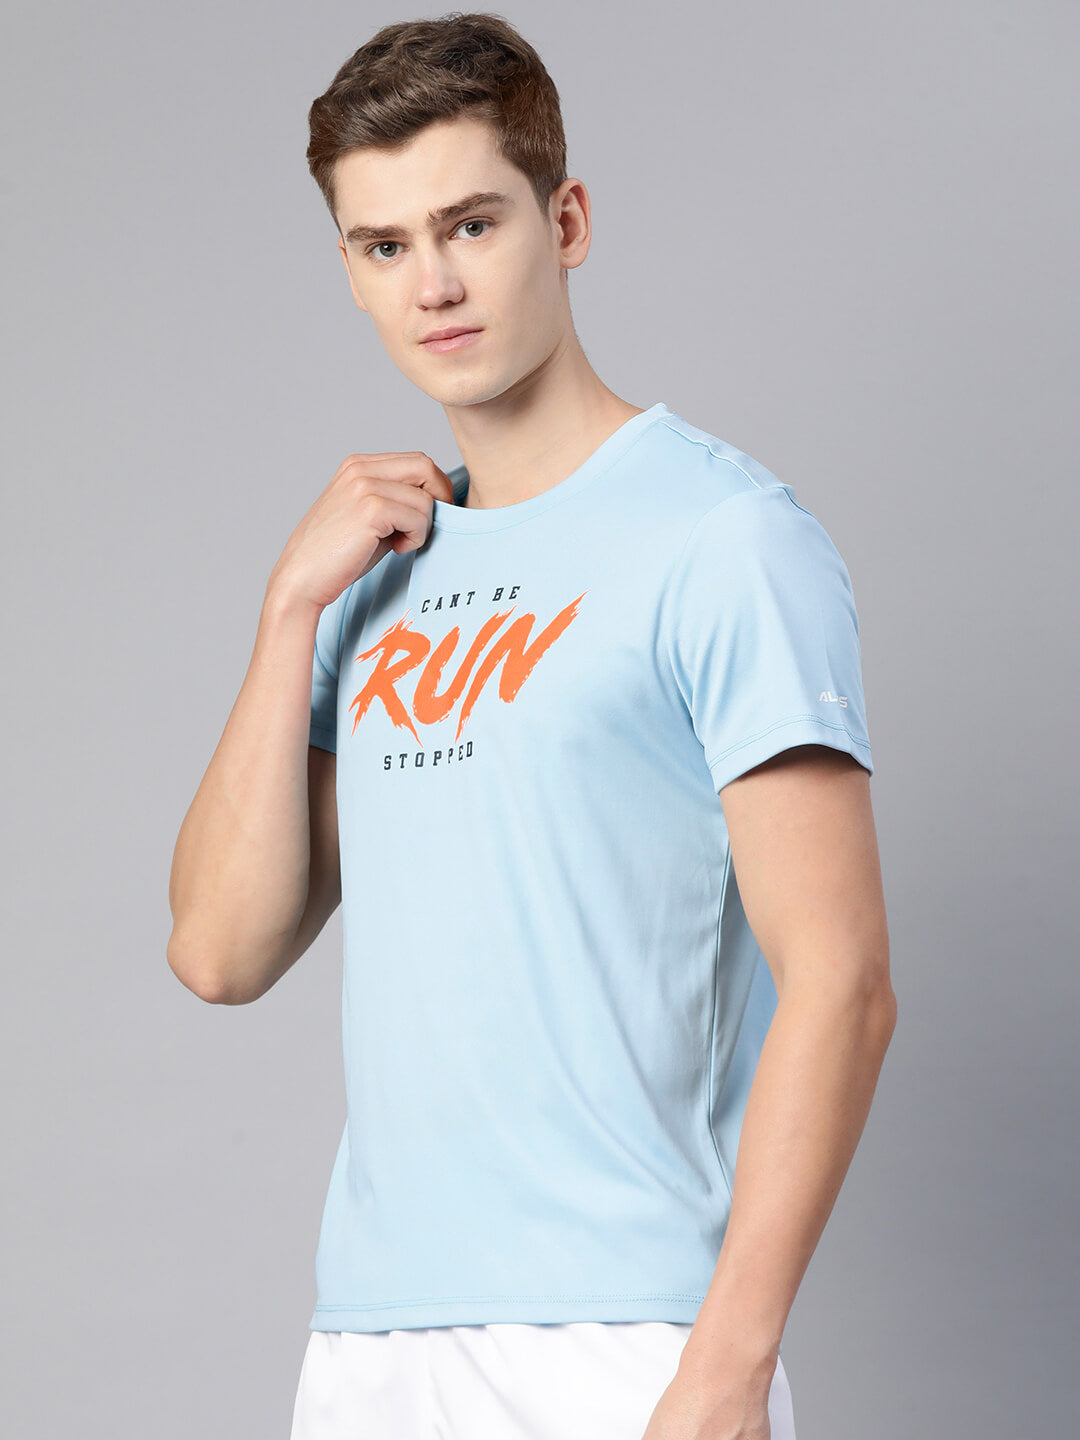 Alcis Men Blue Typography Printed Dry Tech Slim Fit T-shirt